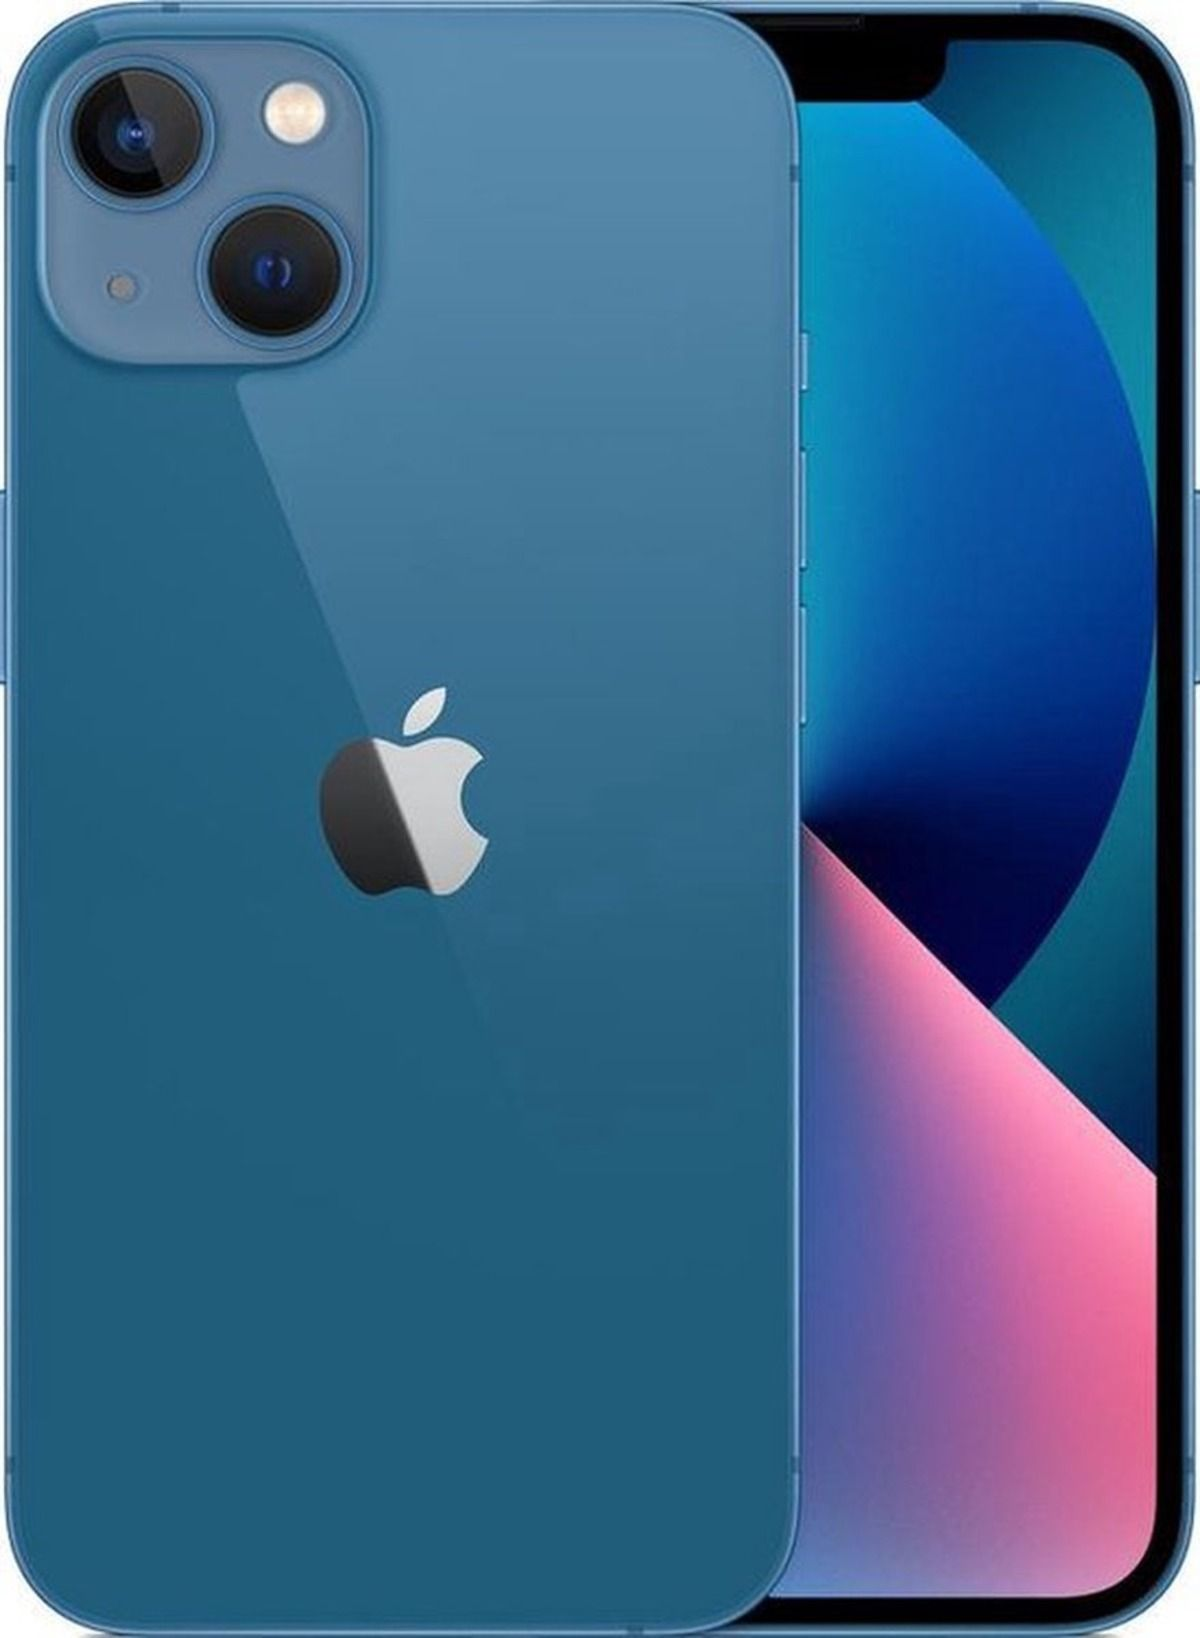 13 REFURBISHED APPLE iPhone (*) blau GB 256 256 GB